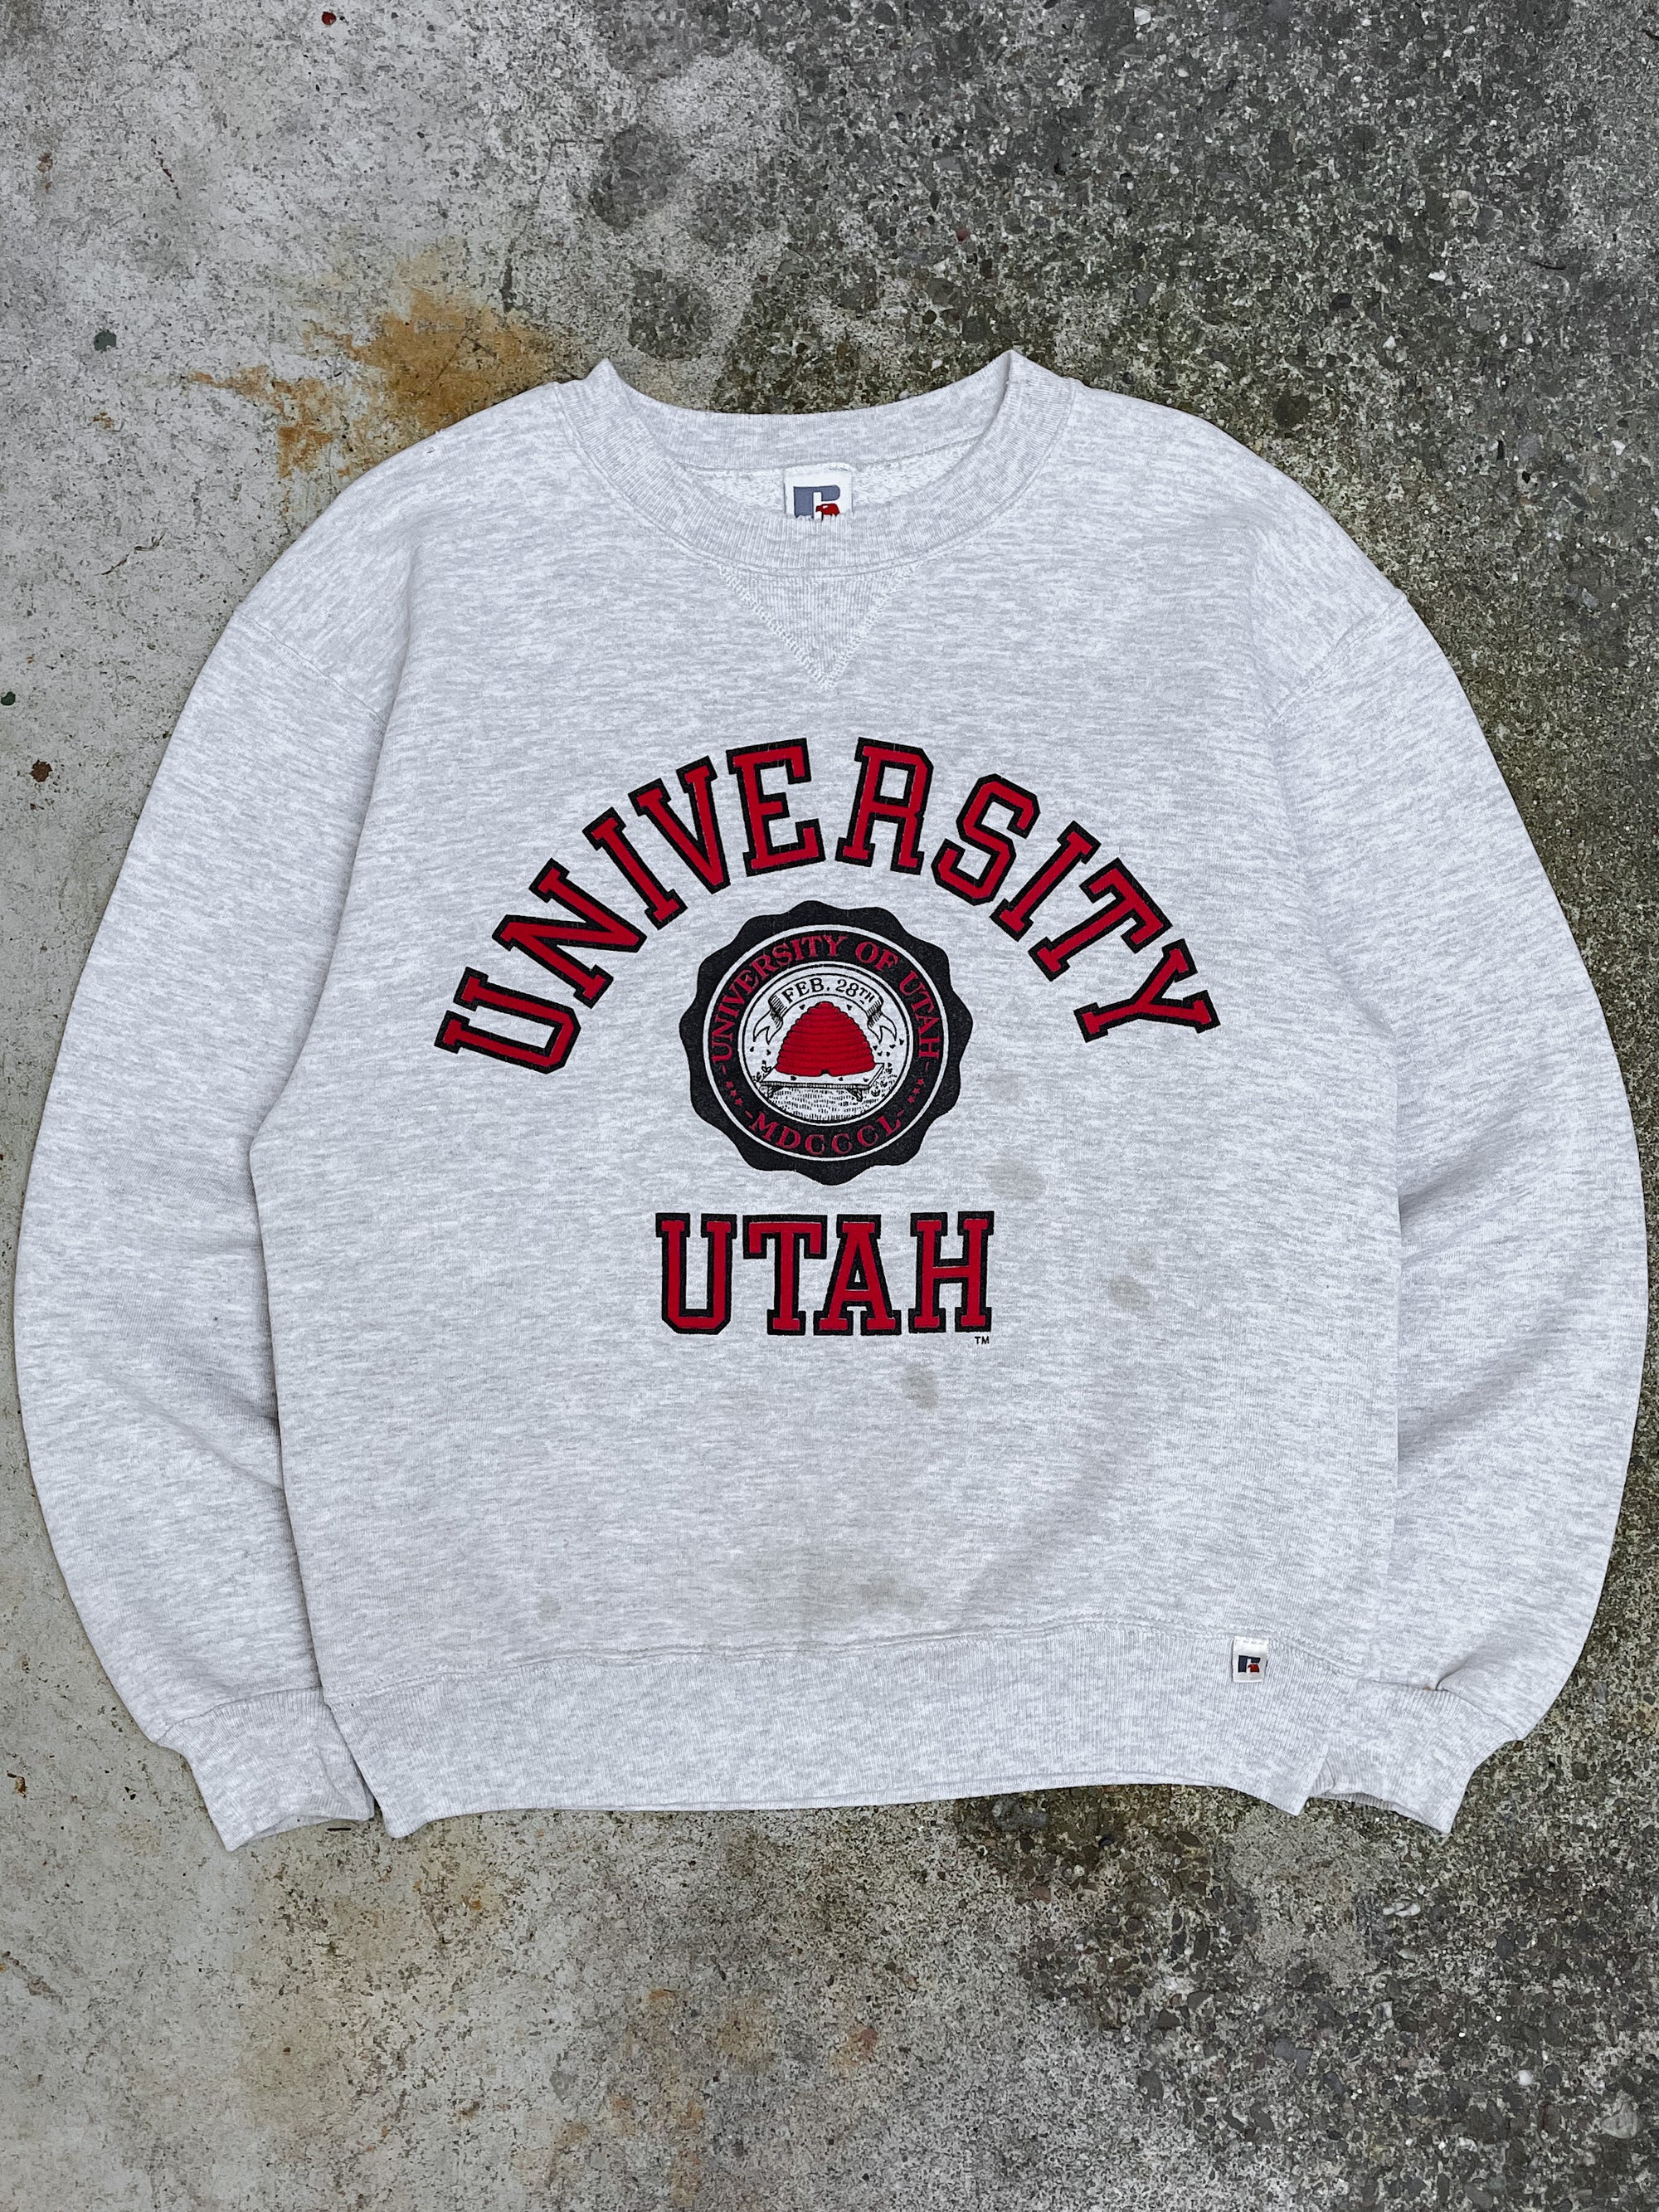 1990s Russell “University Utah” Sweatshirt (M)